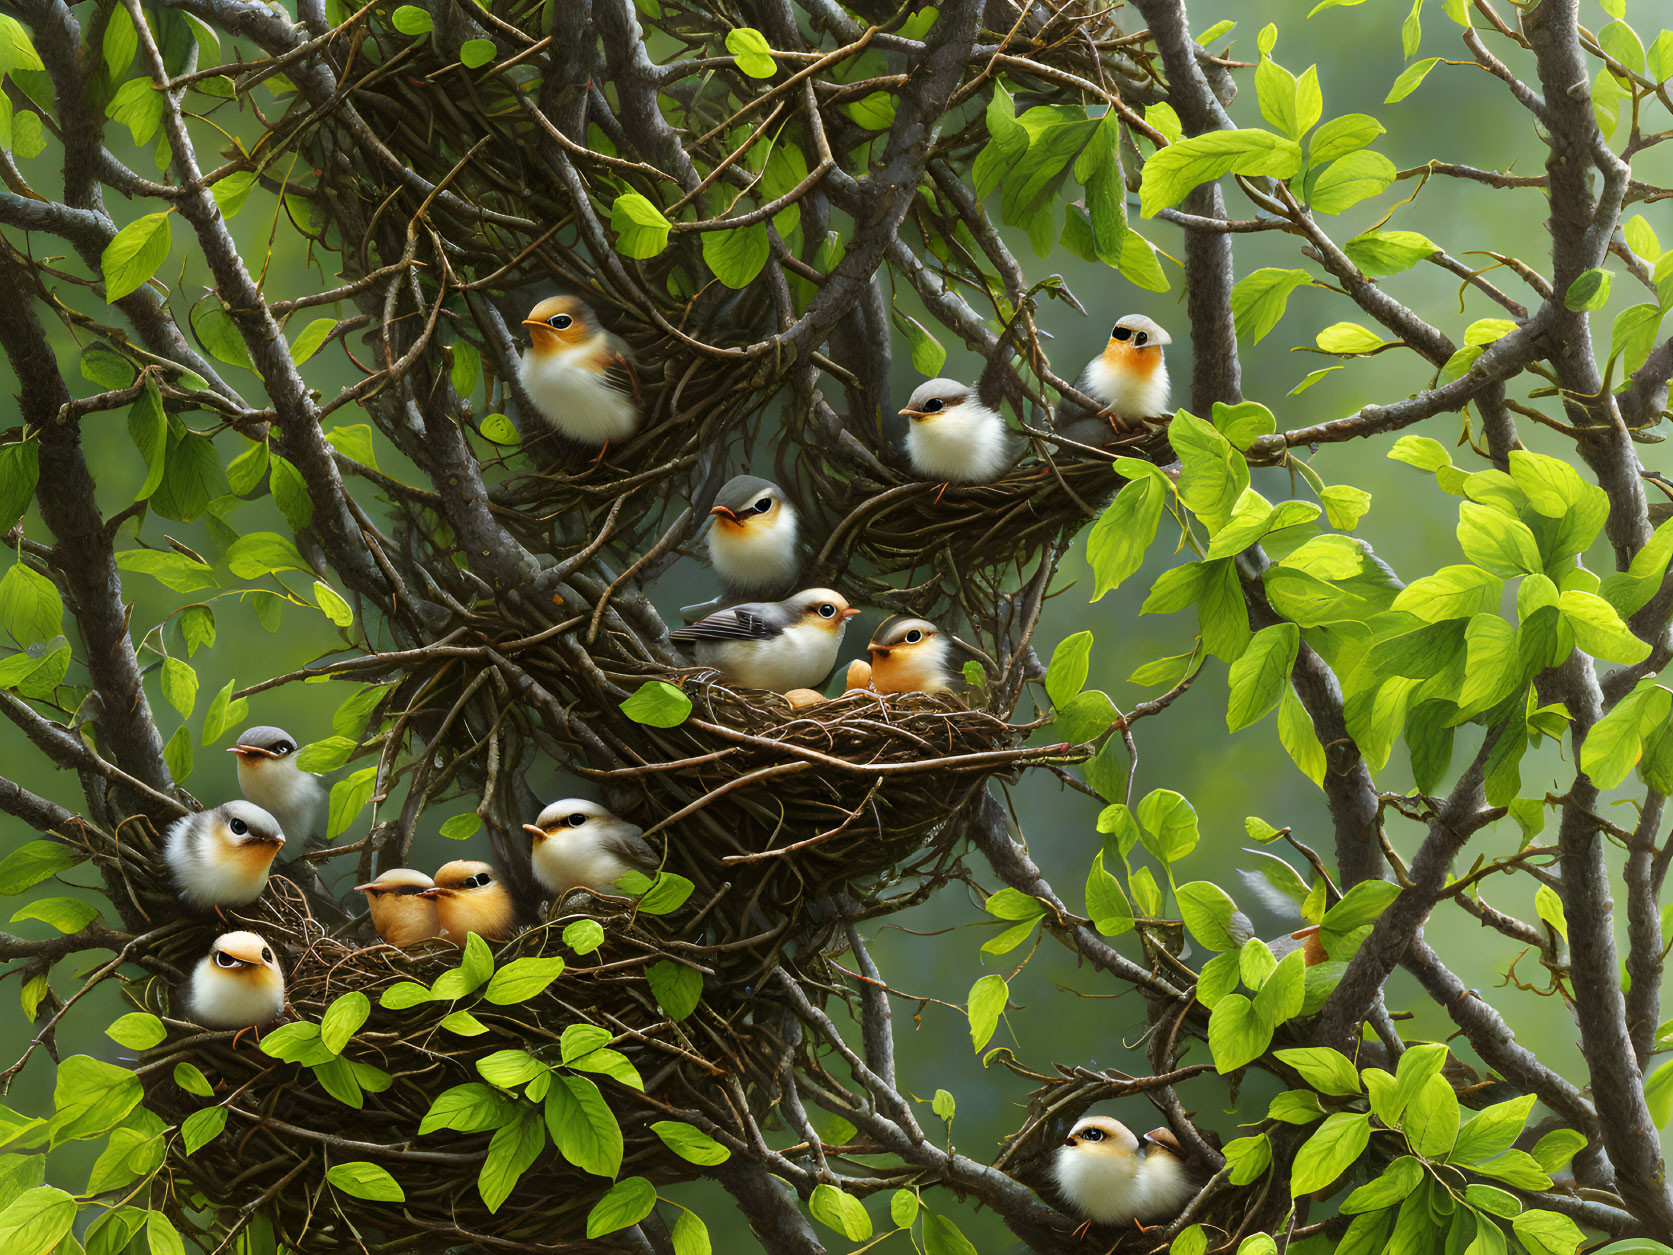 Little baby birds in the nest